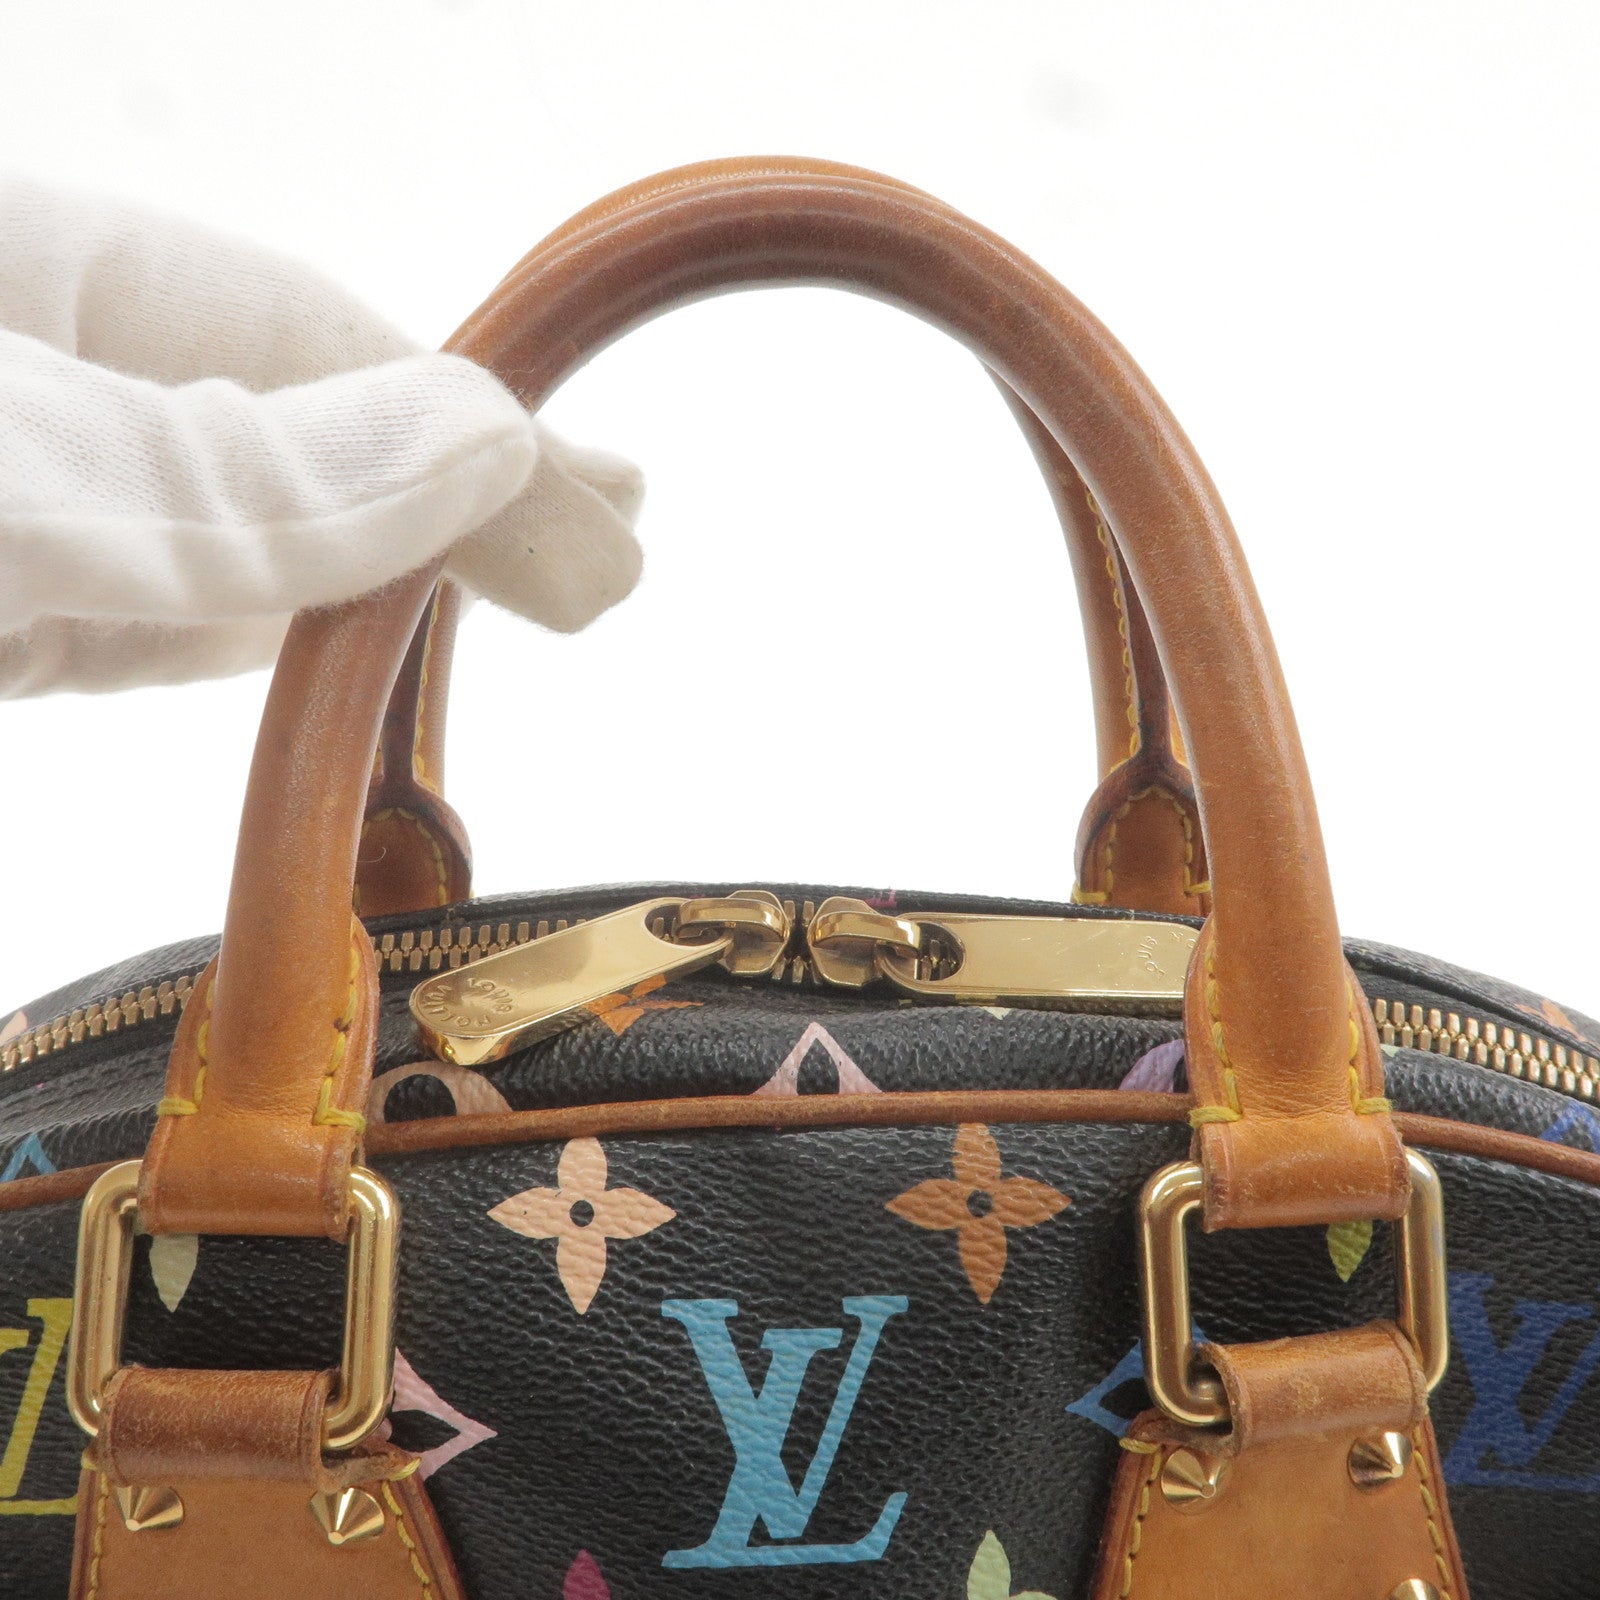 Louis Vuitton Lockit handbag in black monogram canvas